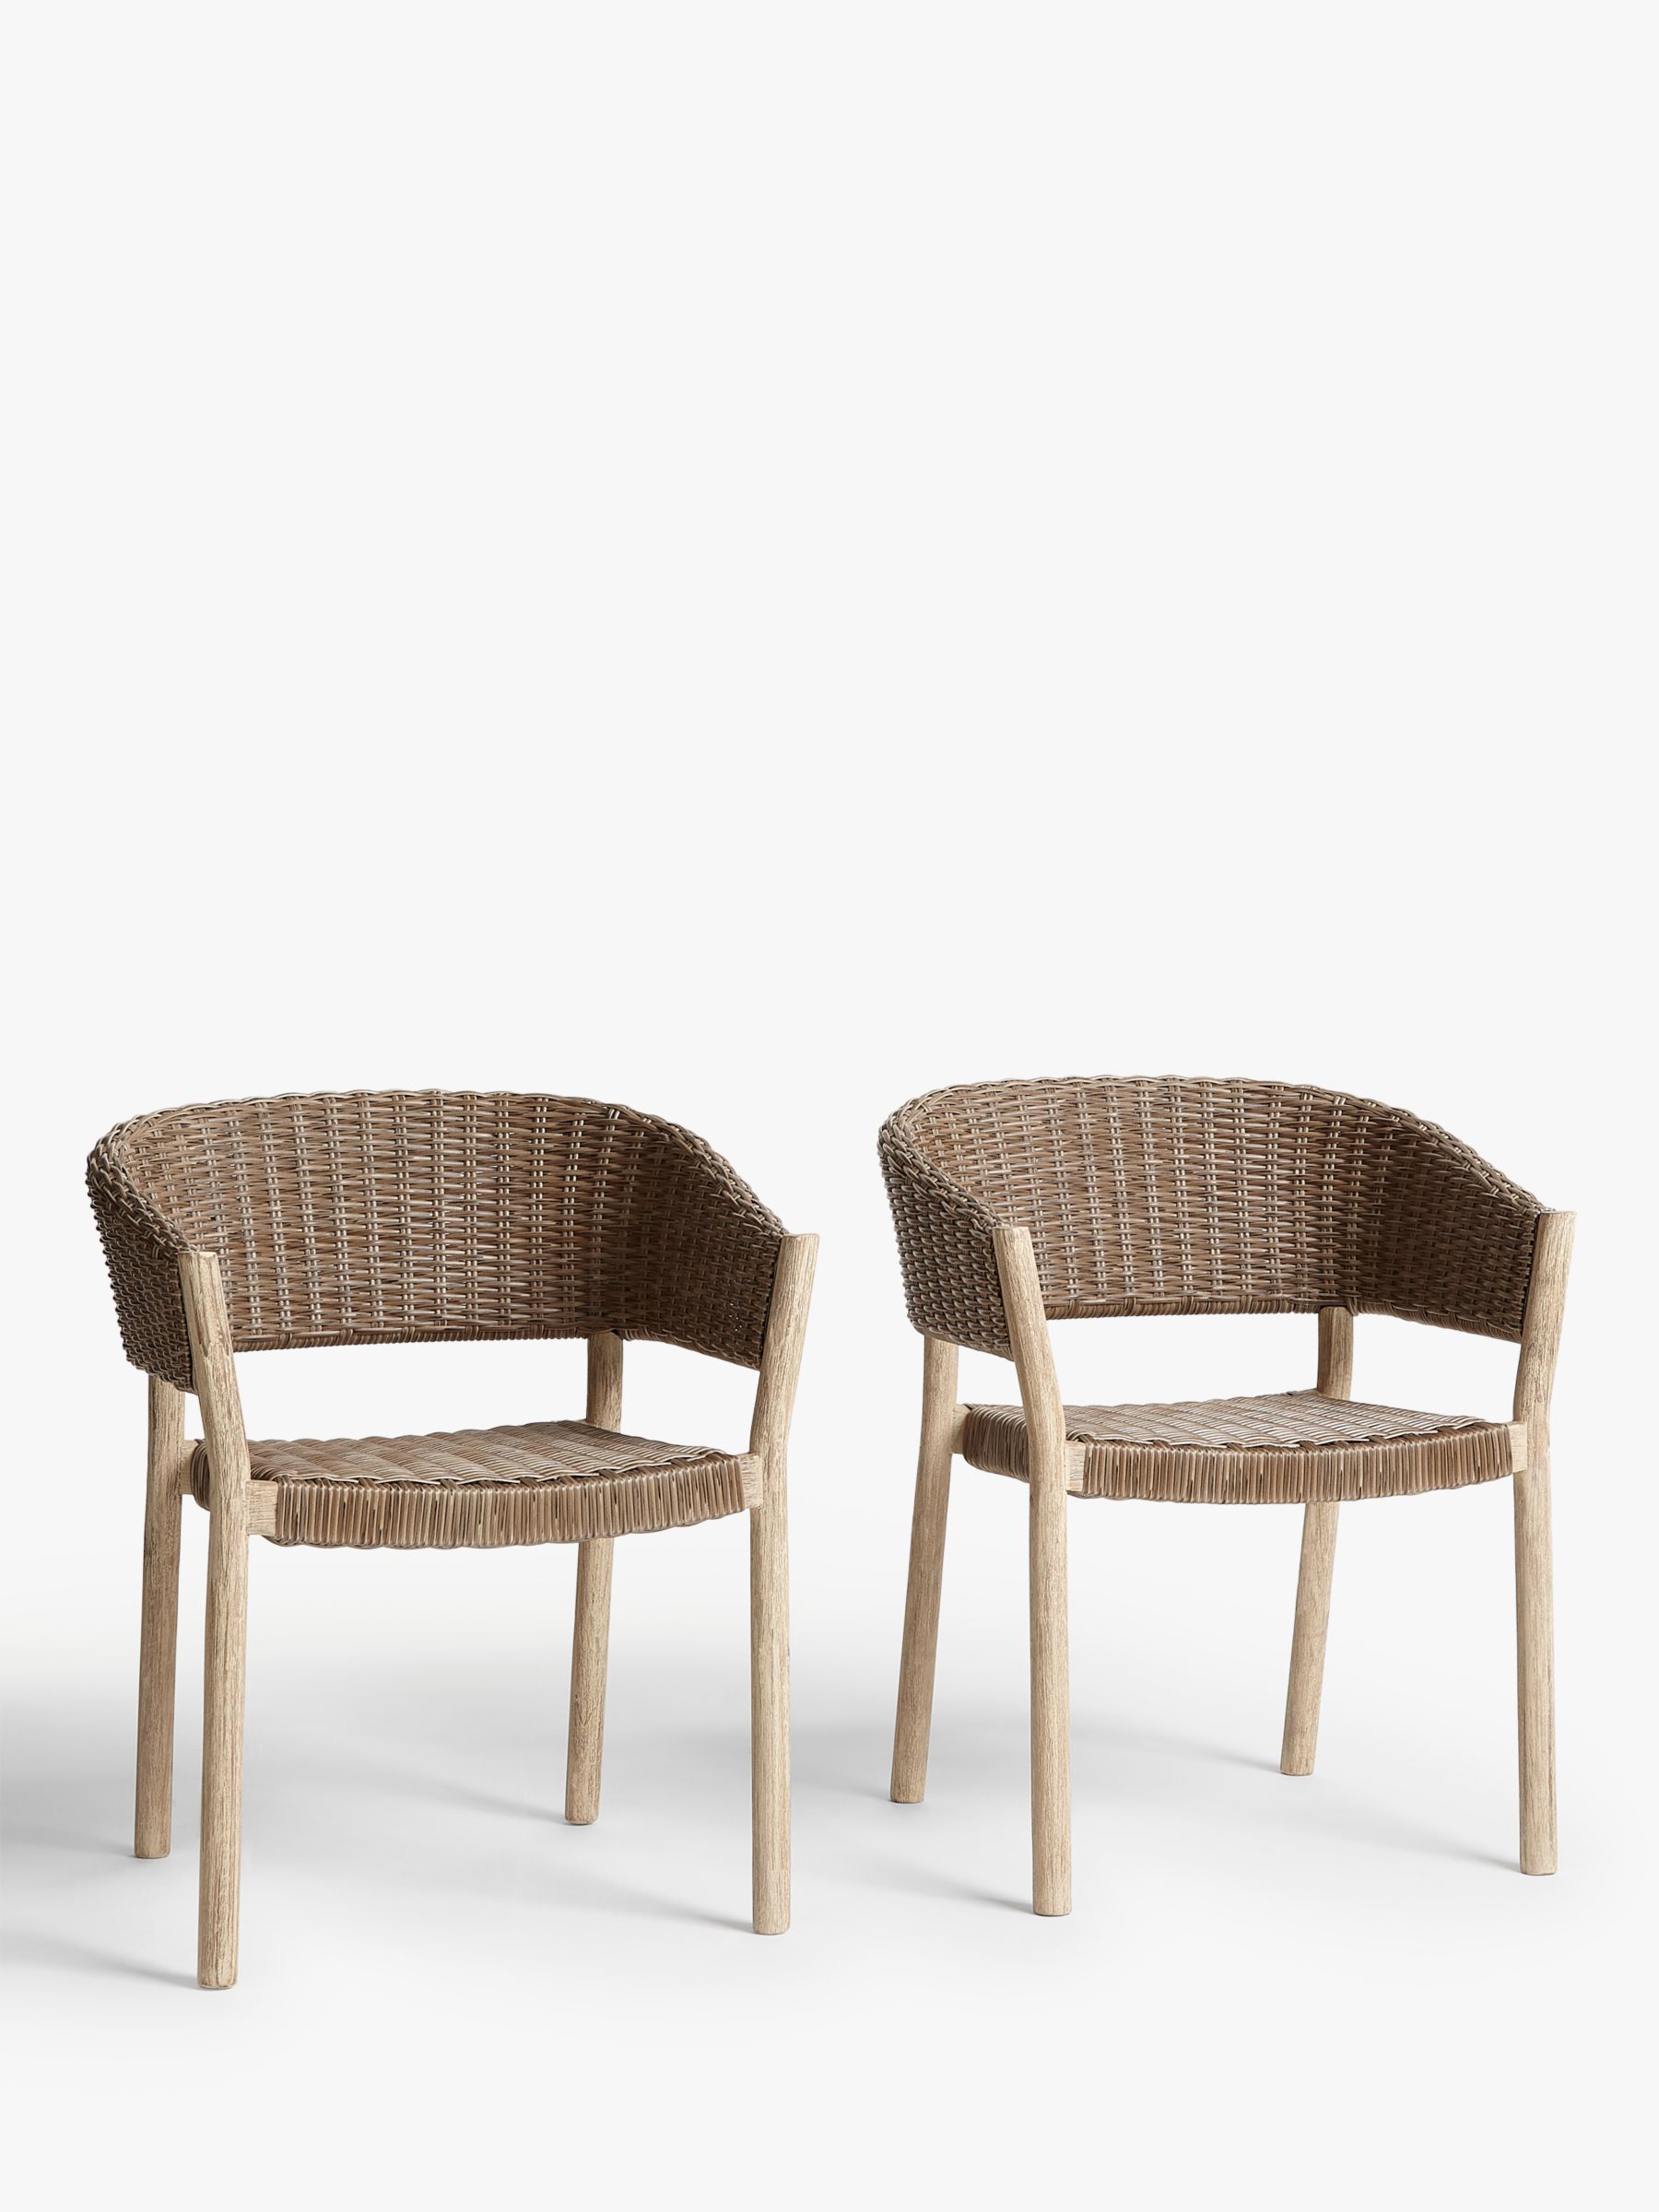 John Lewis & Partners Burford Garden Woven Dining Chairs, Set of 2, FSC